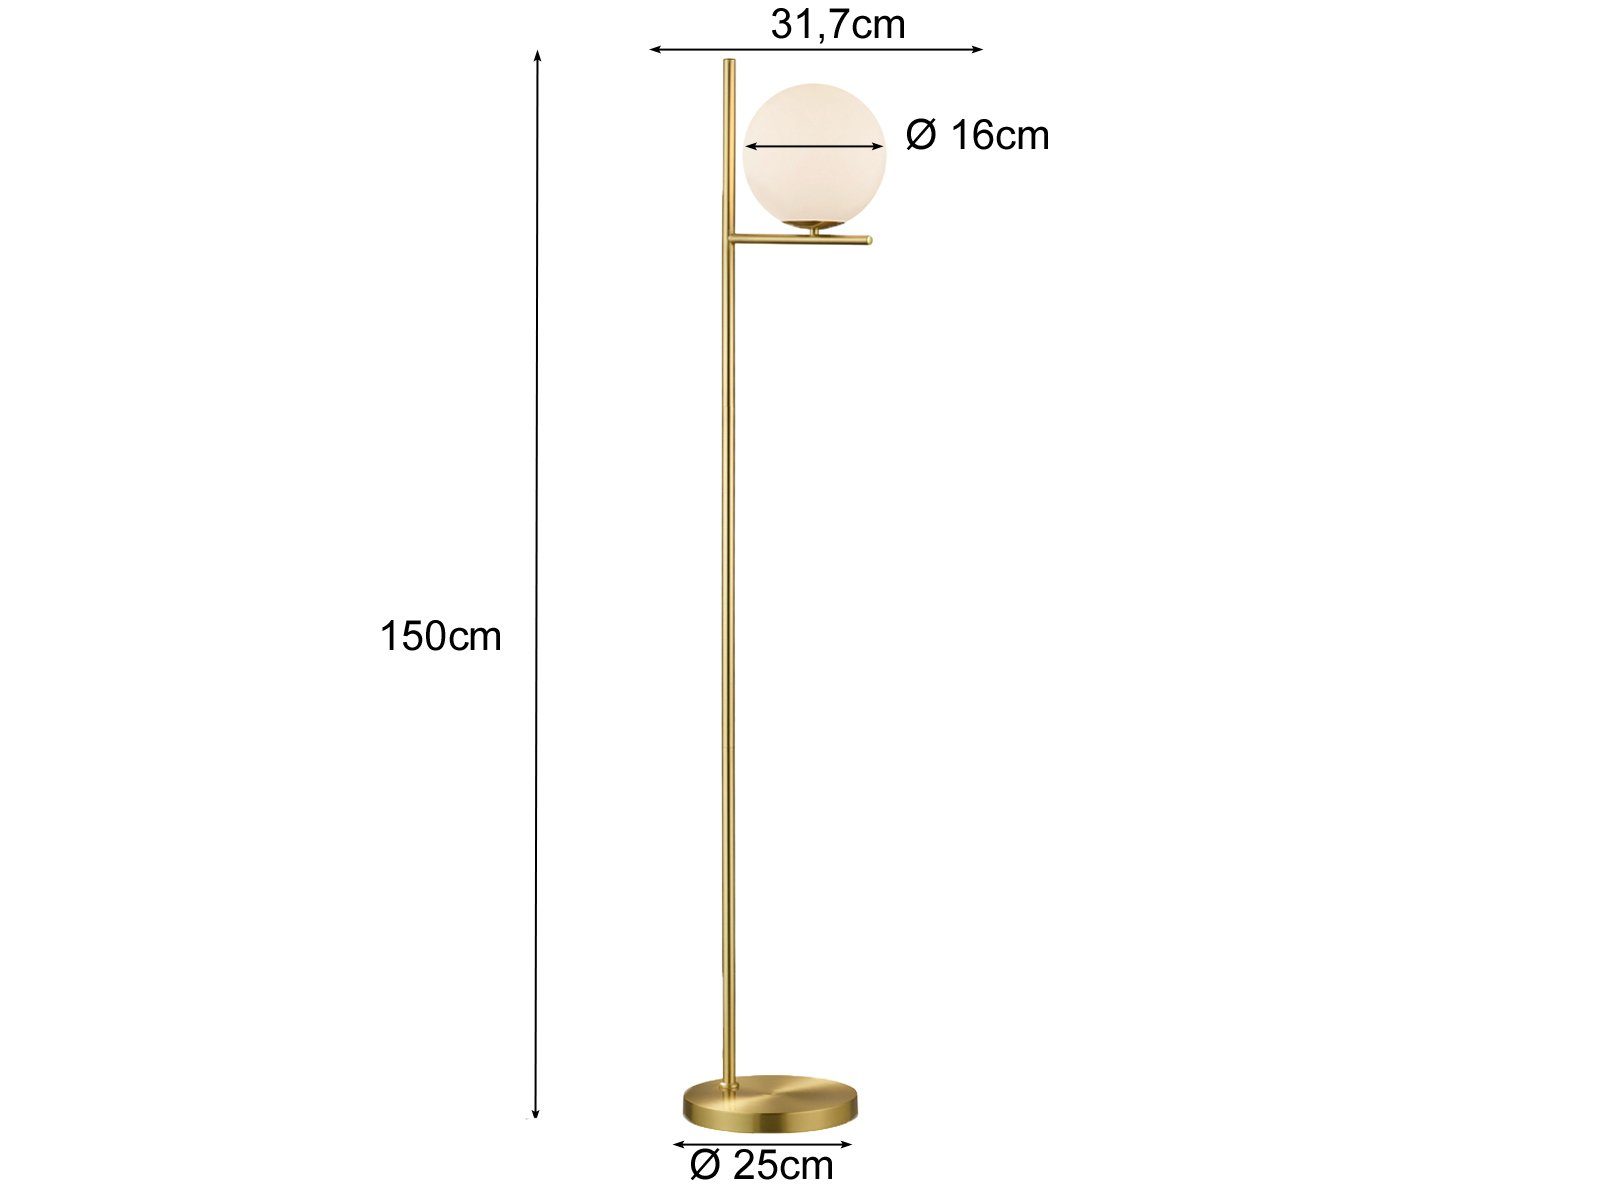 meineWunschleuchte Warmweiß, Weiß LED / Dimmfunktion, dimmbar-e Lampenschirm LED matt H: 150cm mit moderne Stehlampe, gold-en, Messing Glas-Kugel wechselbar,